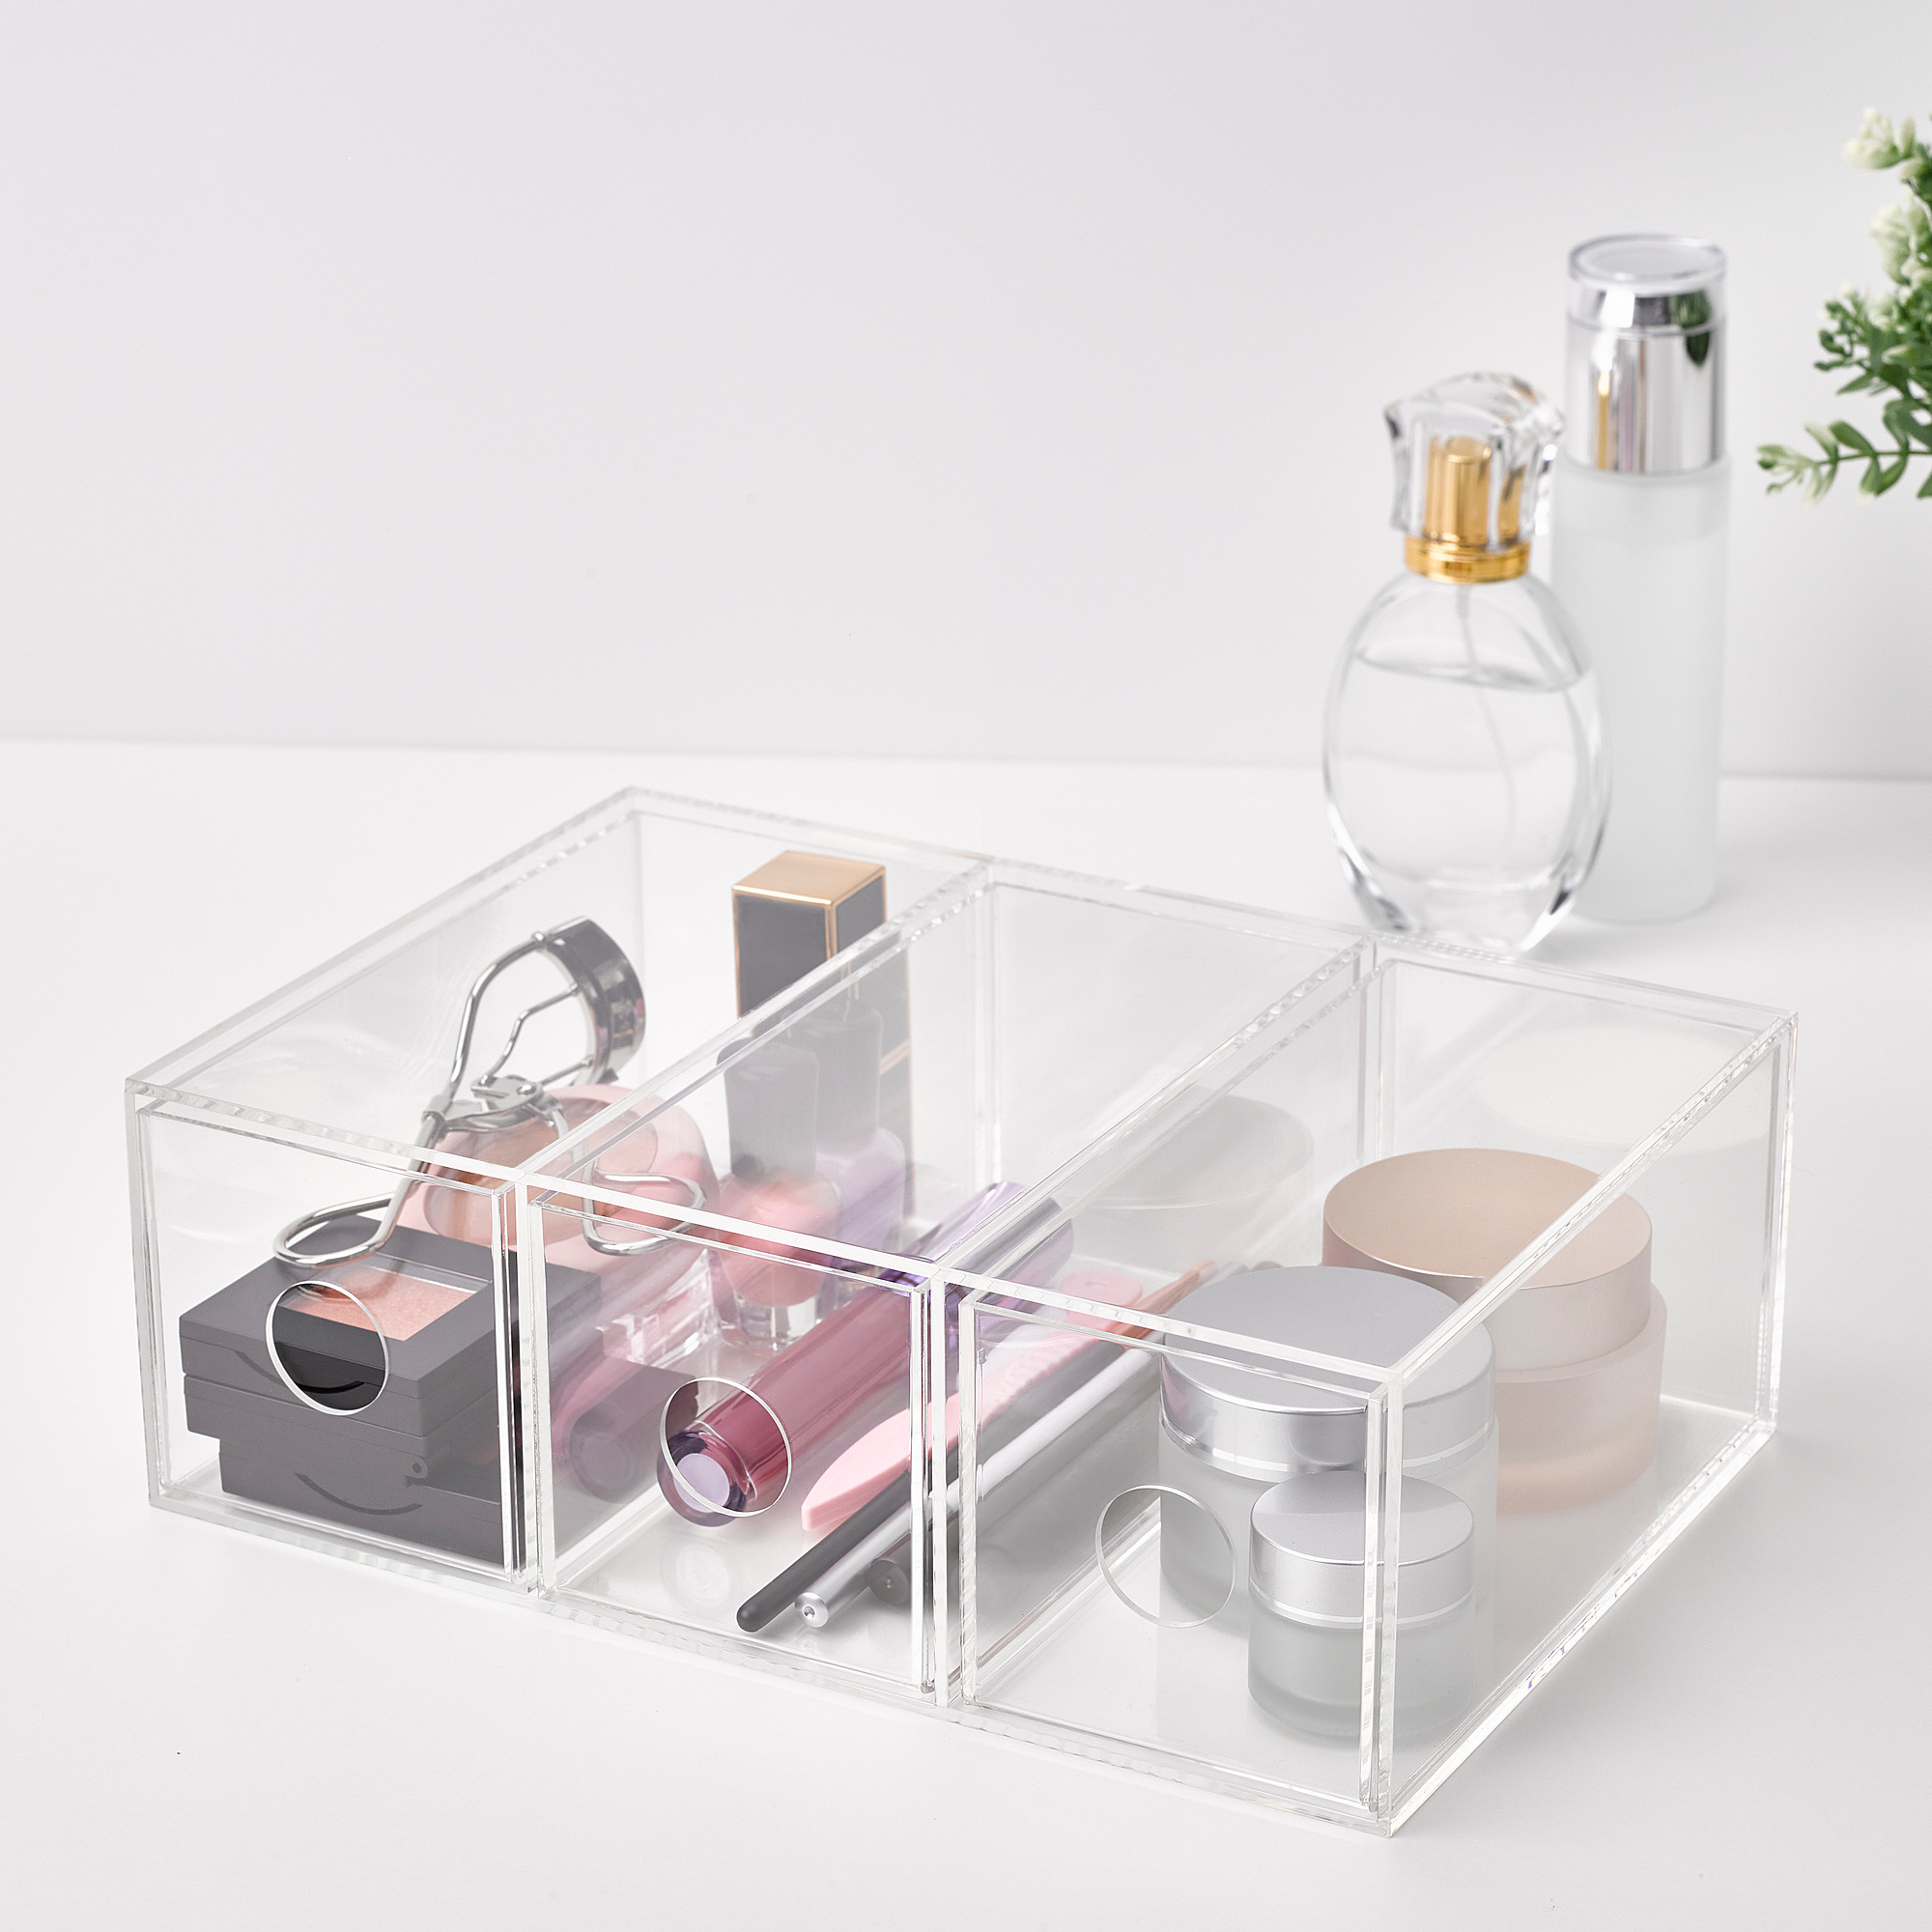 MOJAN make-up storage with 3 drawers